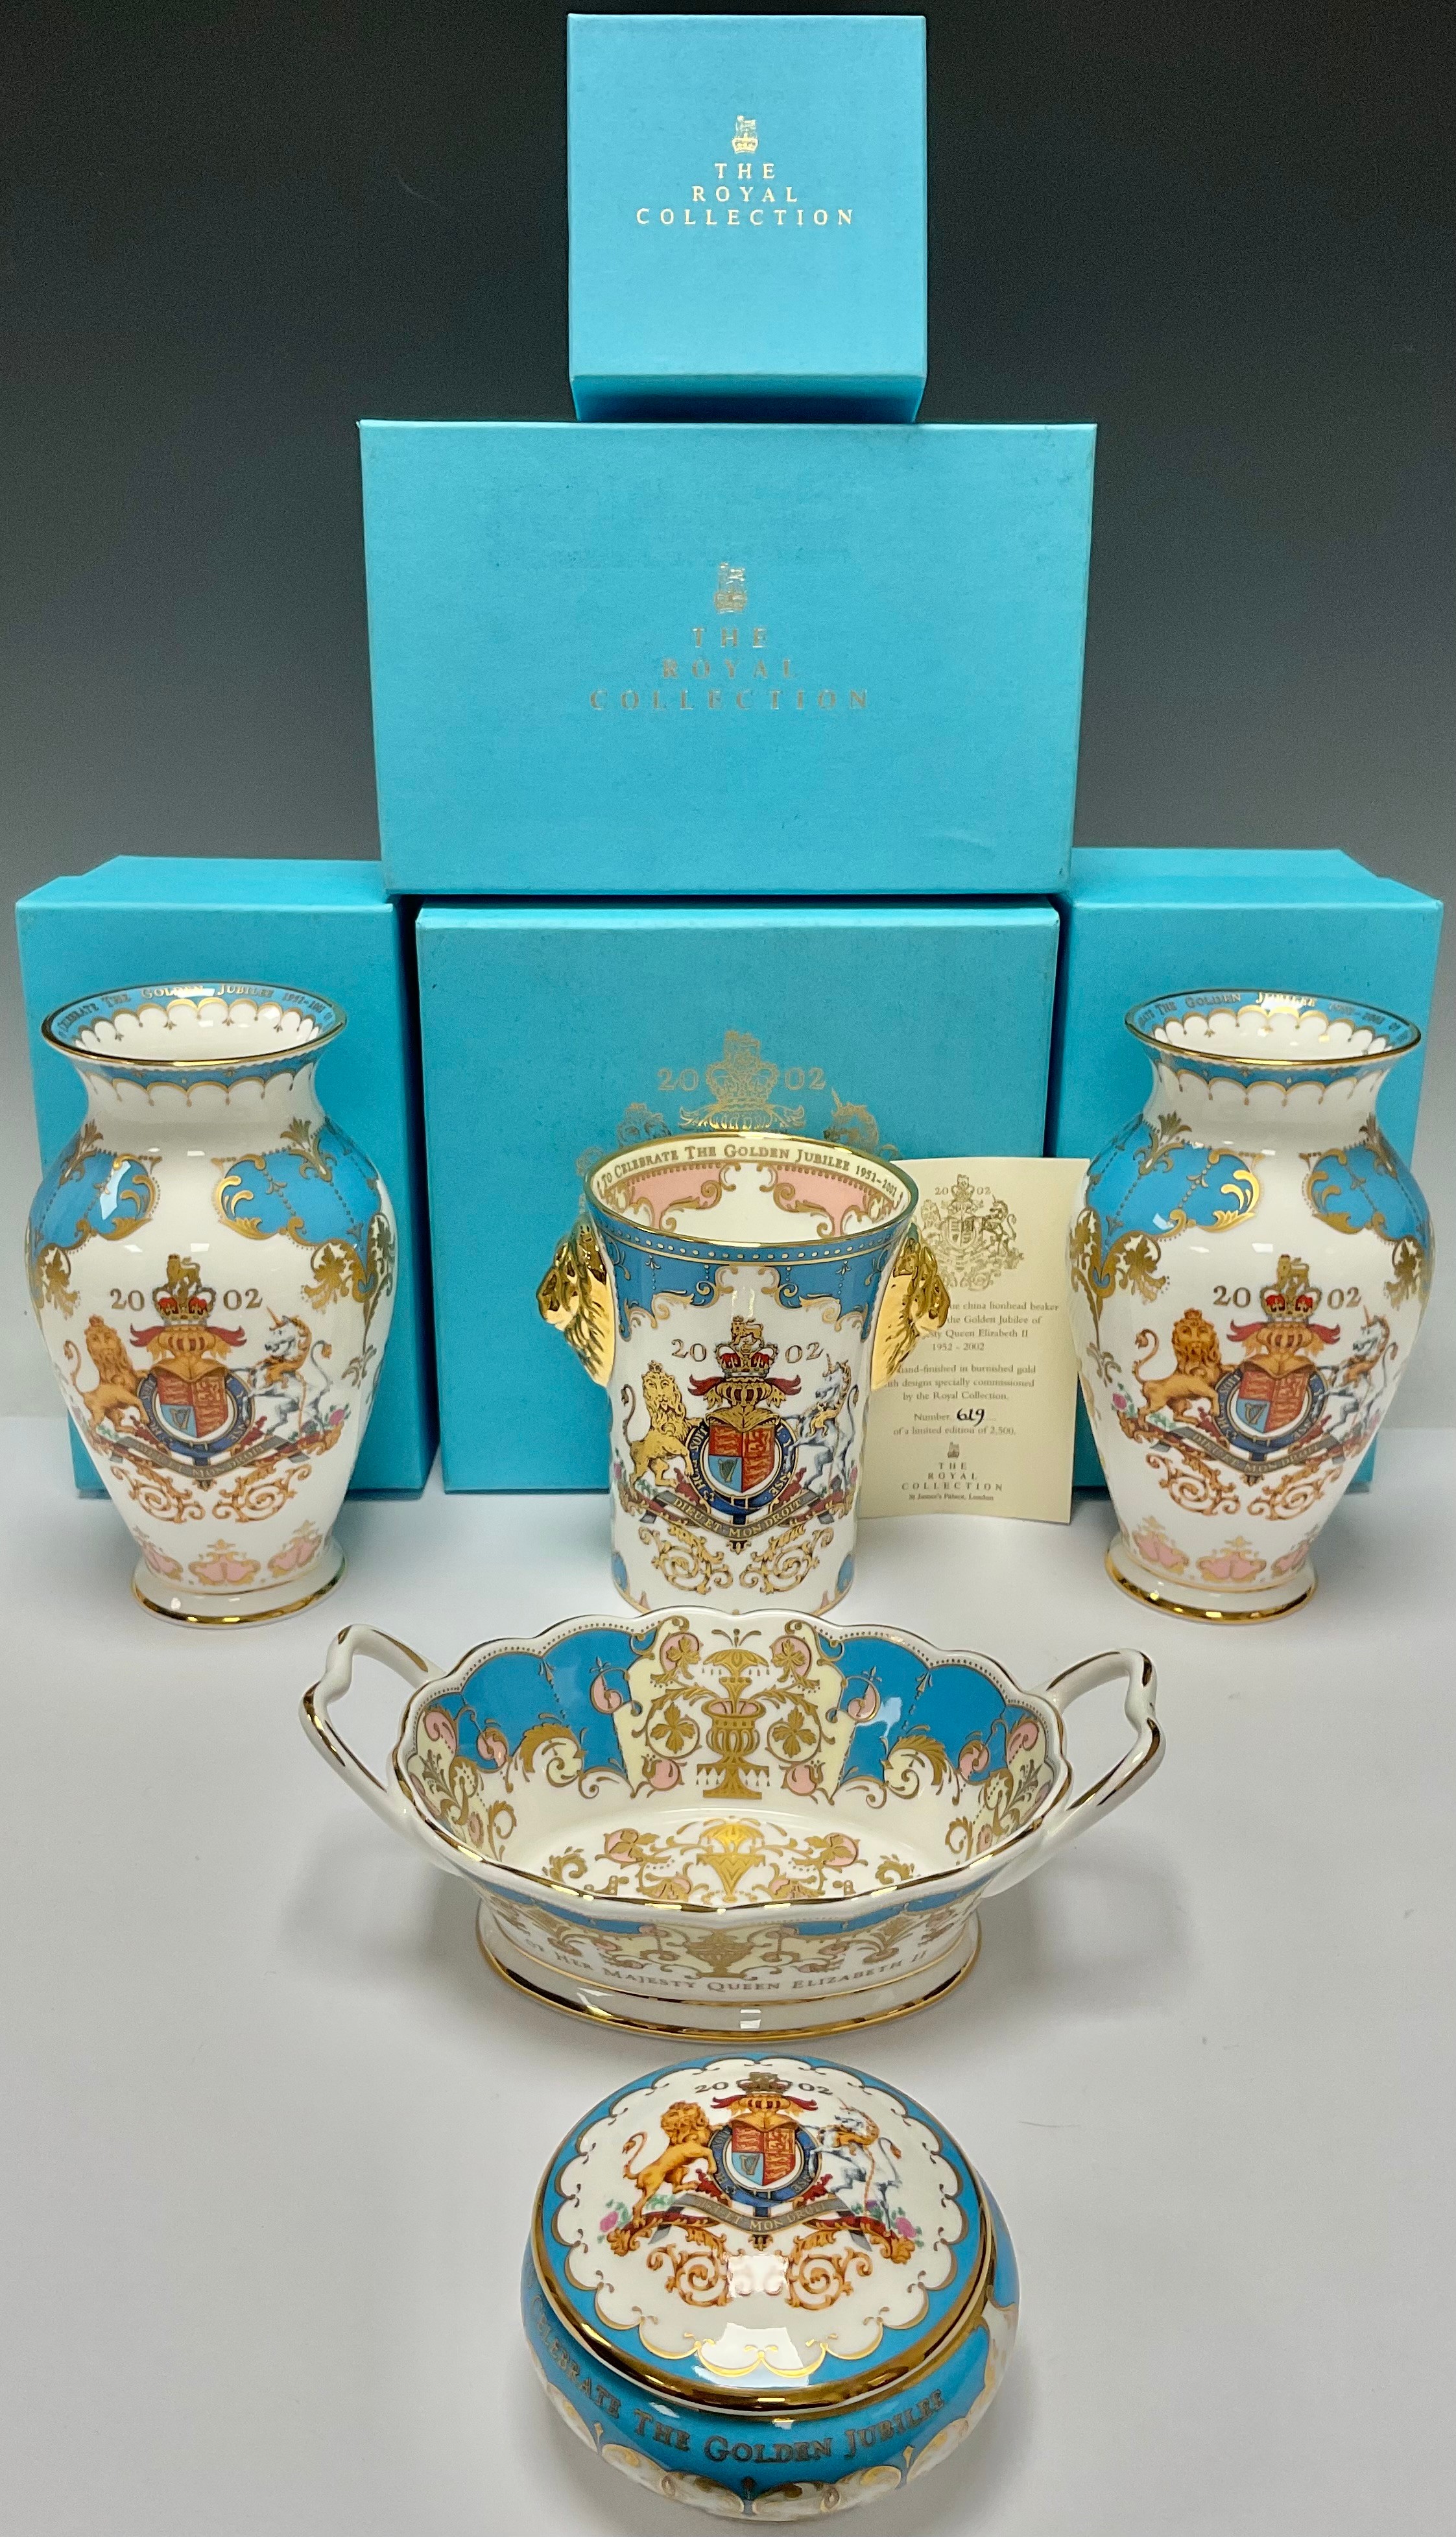 A Royal Collection Golden Jubilee beaker, Queen Elizabeth II 1952 0 2002, pair of lion mask handles,